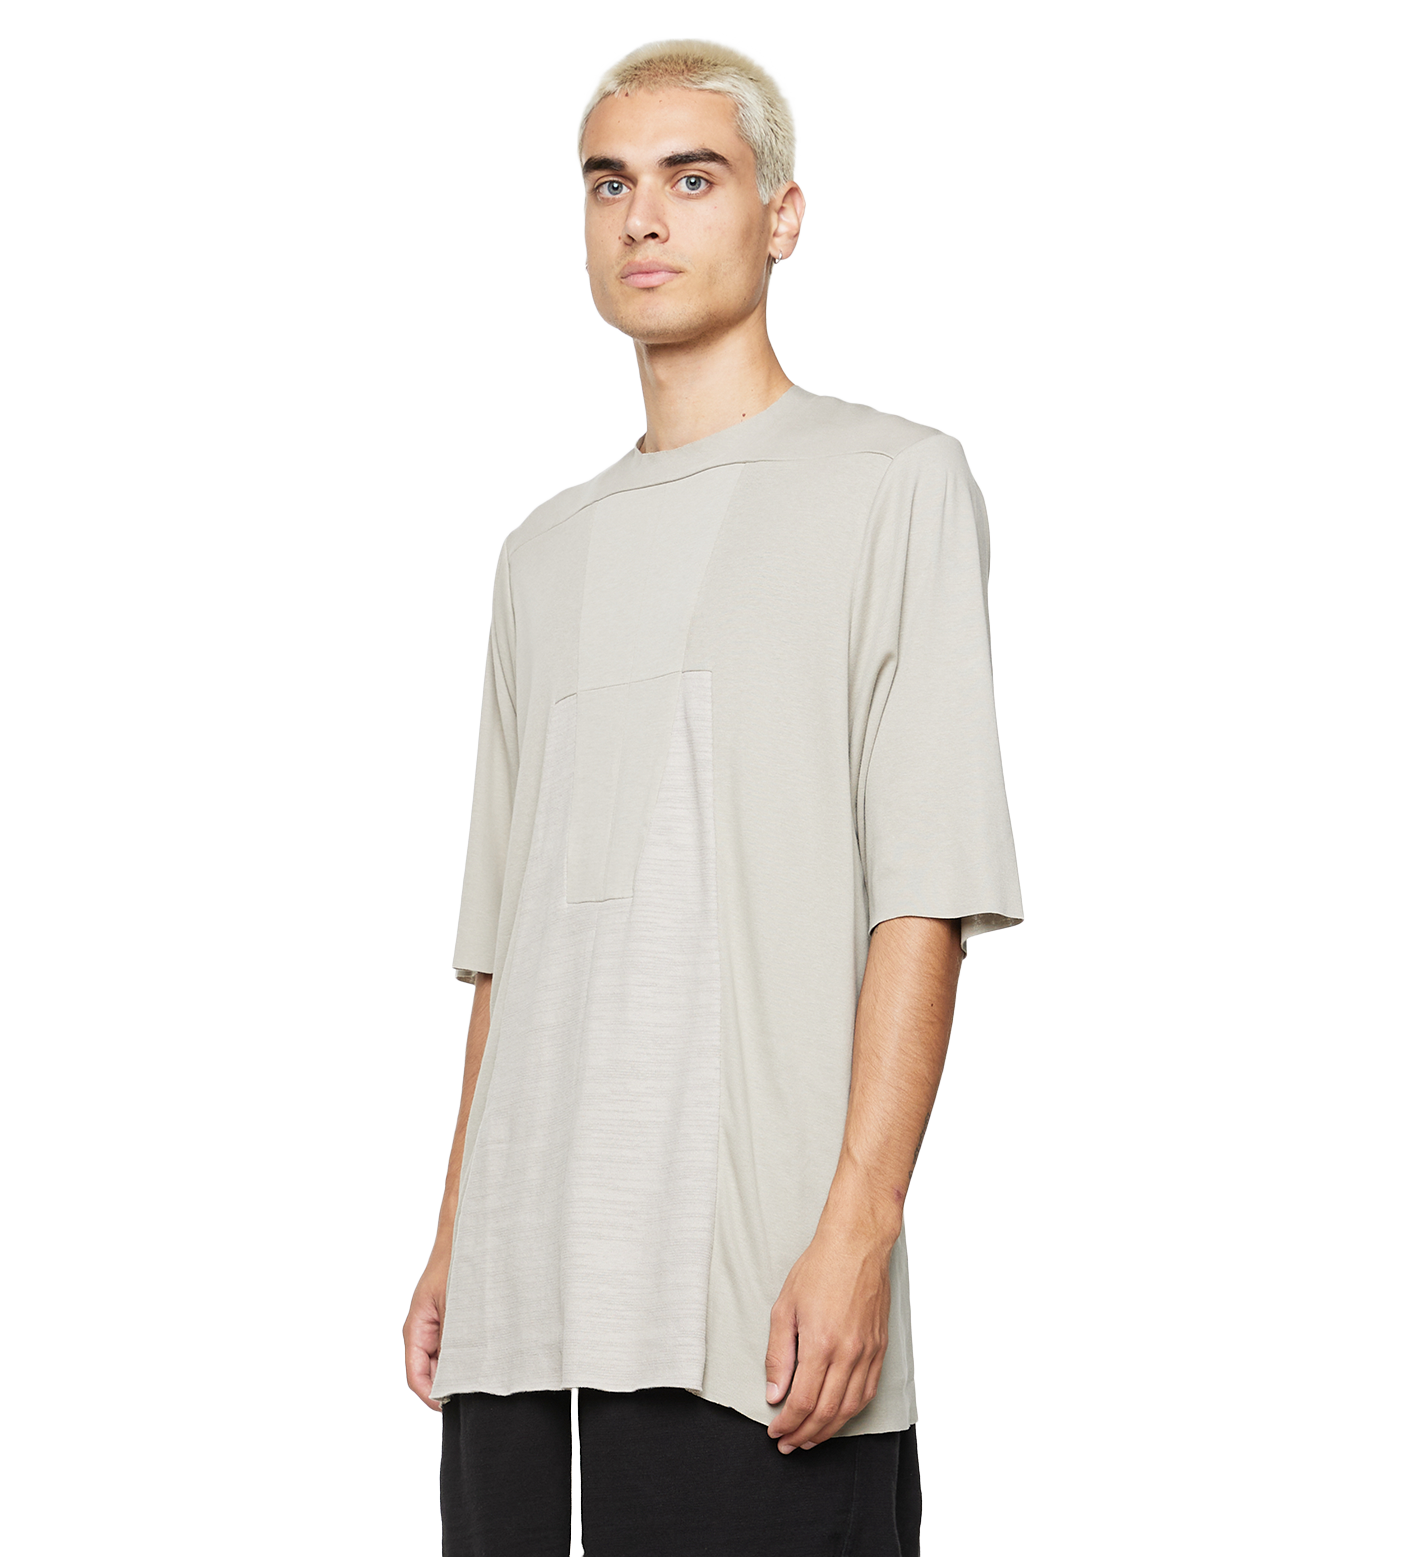 Knit Luxor T-shirt White